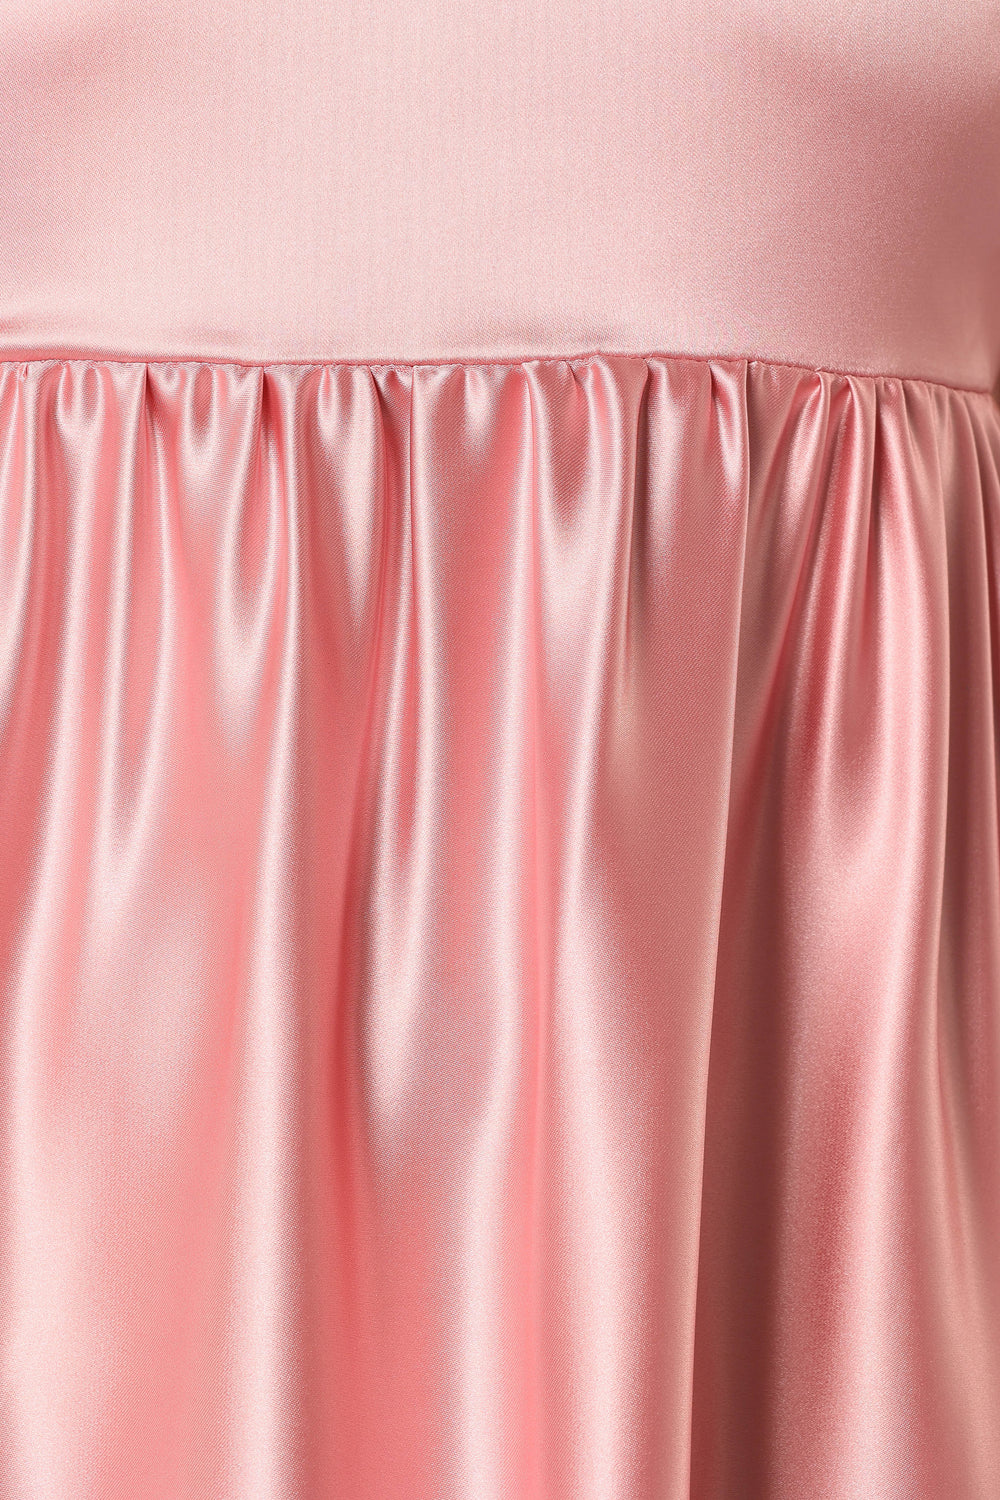 DRESSES @Teagan Bow Back Midi Dress - Soft Pink